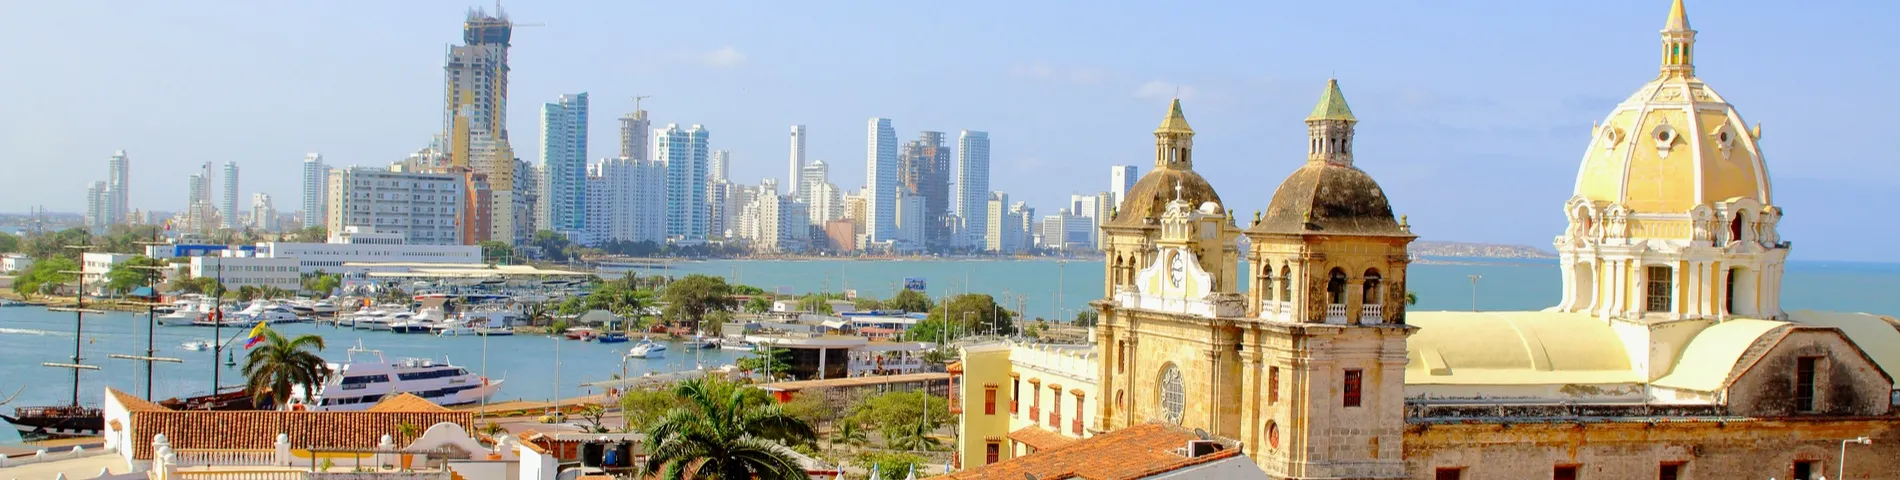 Cartagena - Curs estàndard